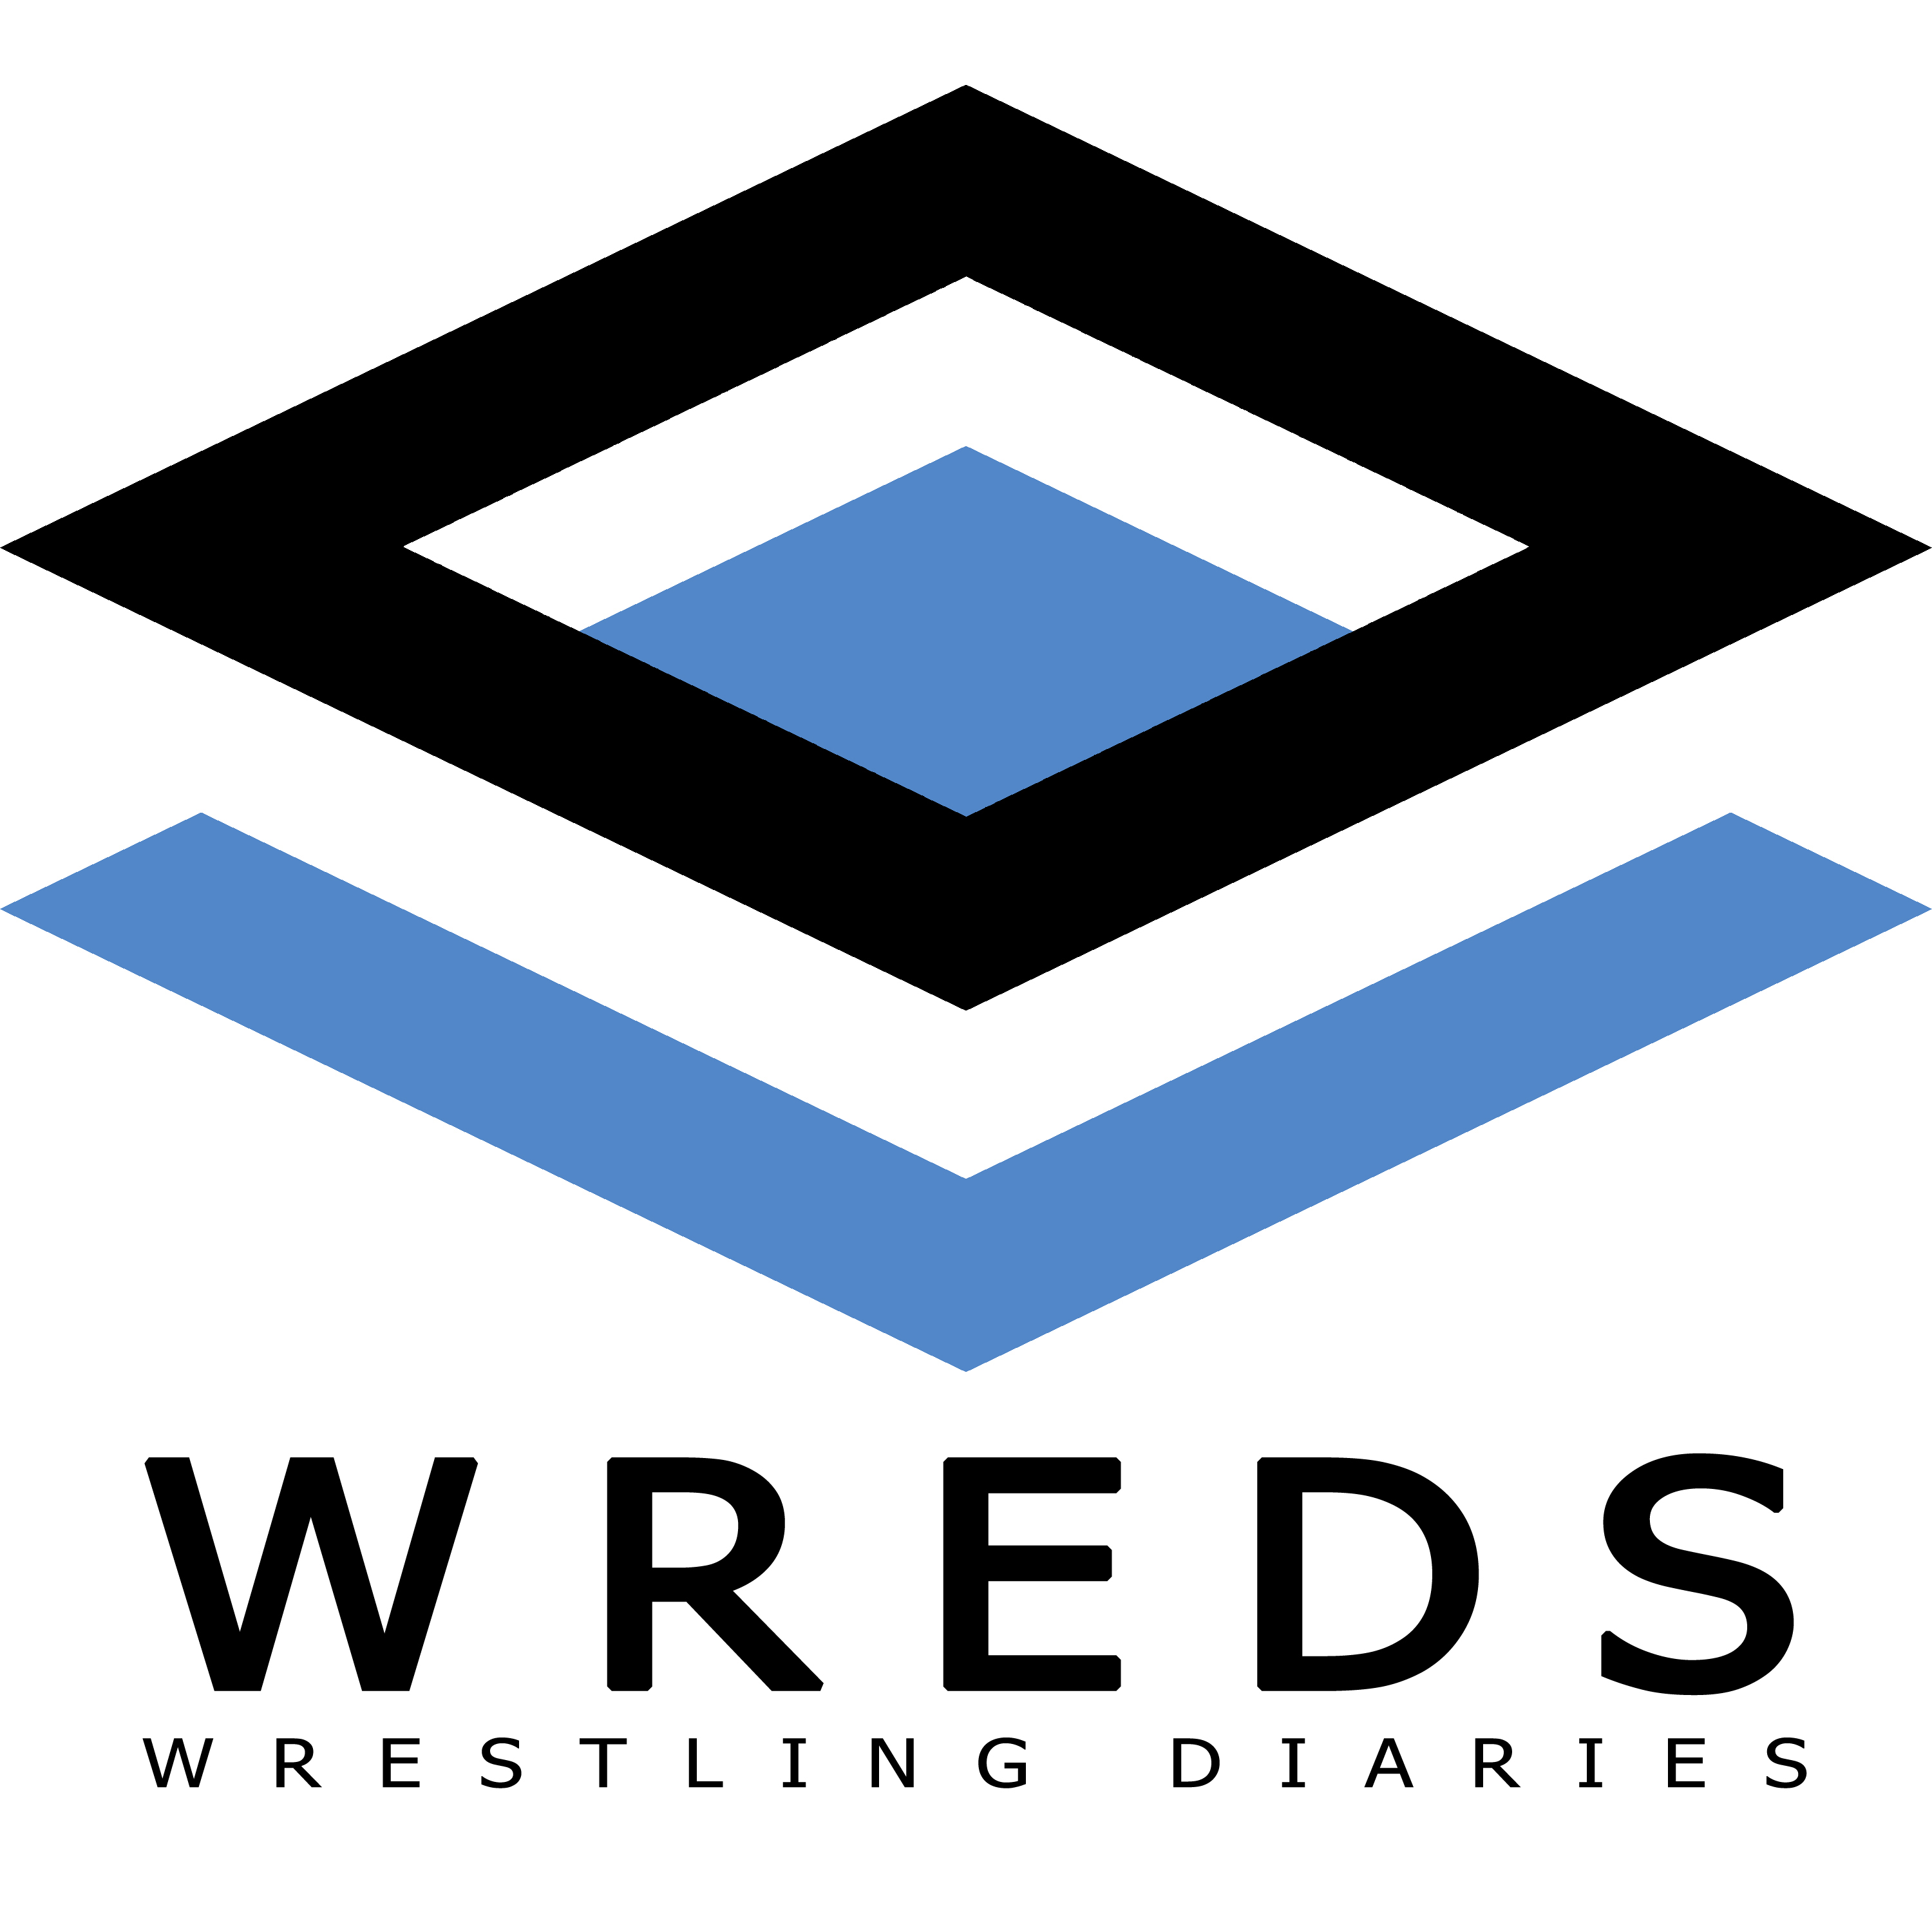 WREDS - Wrestling Diaries